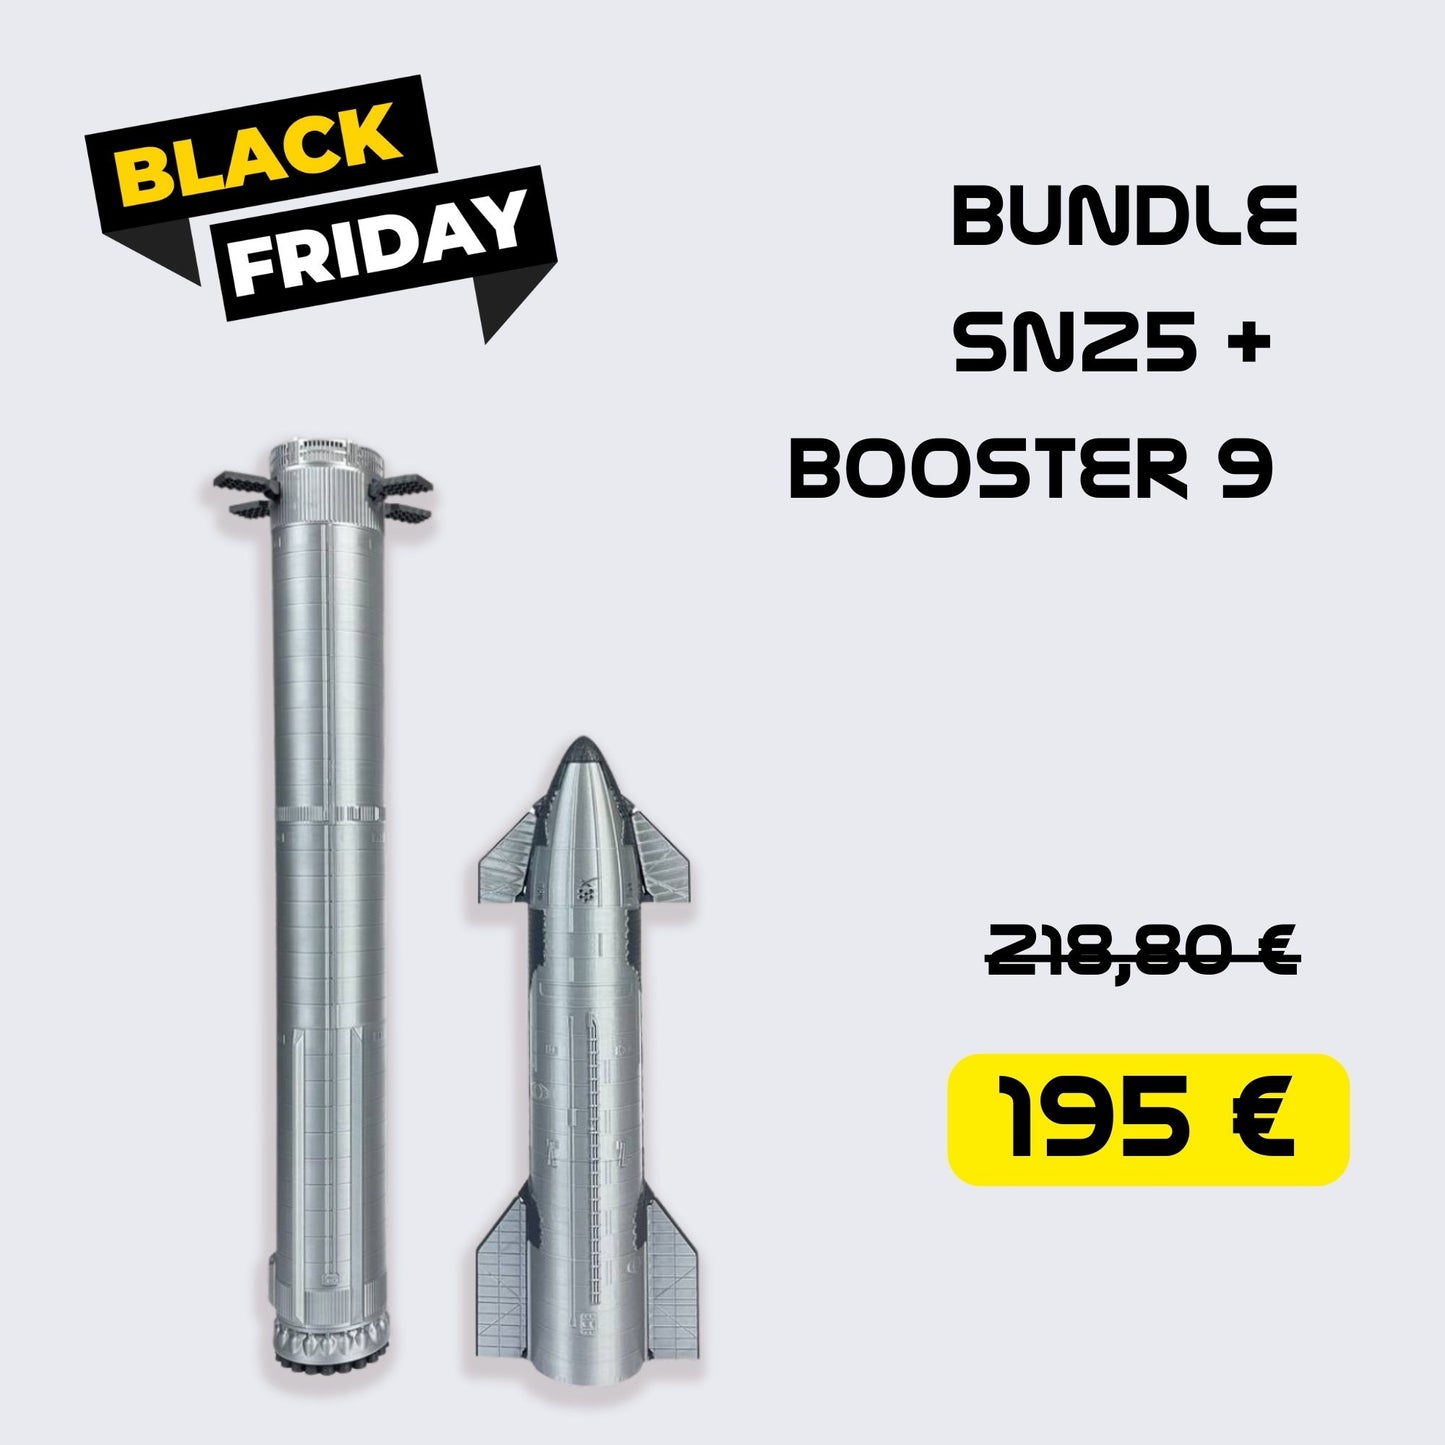 Black Friday Bundle SN25 + Booster 9